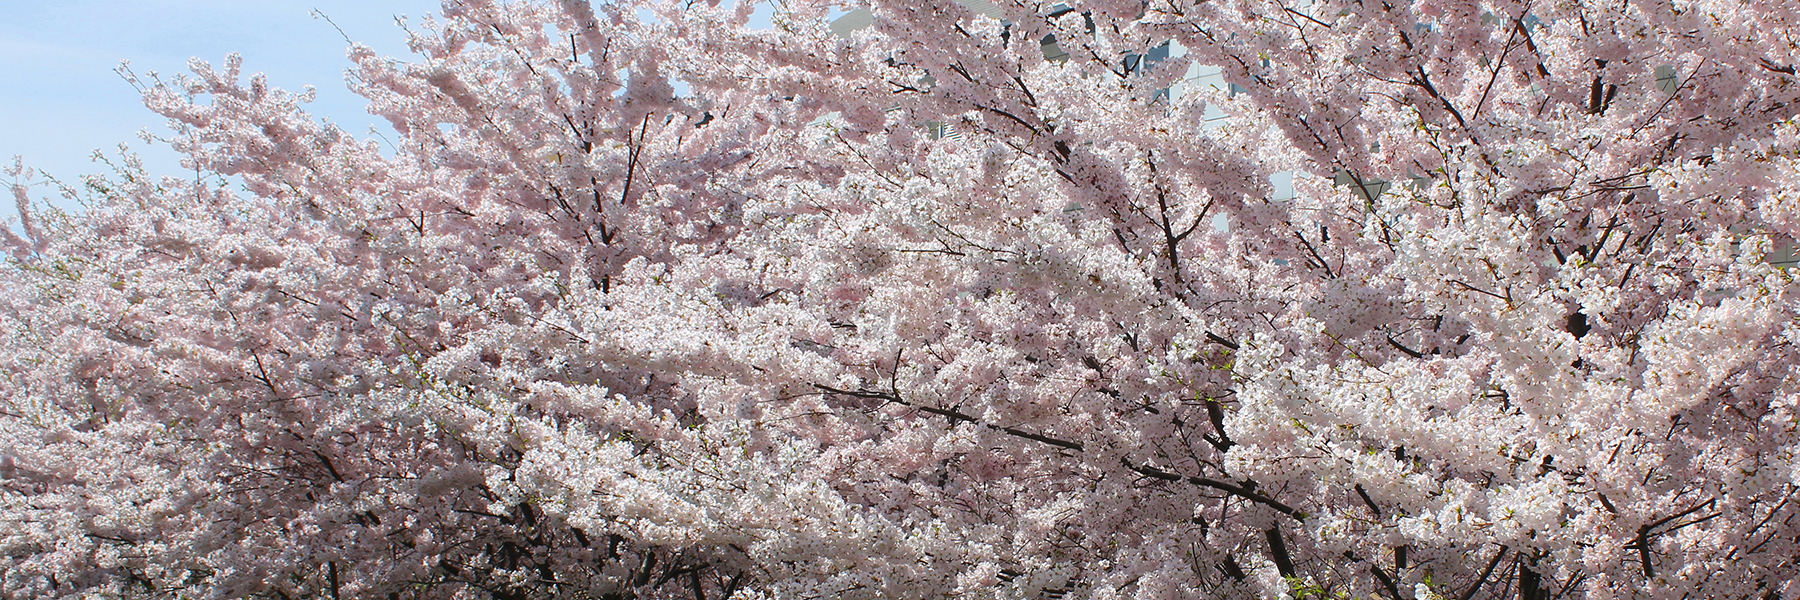 Sakura trees in bloom at York